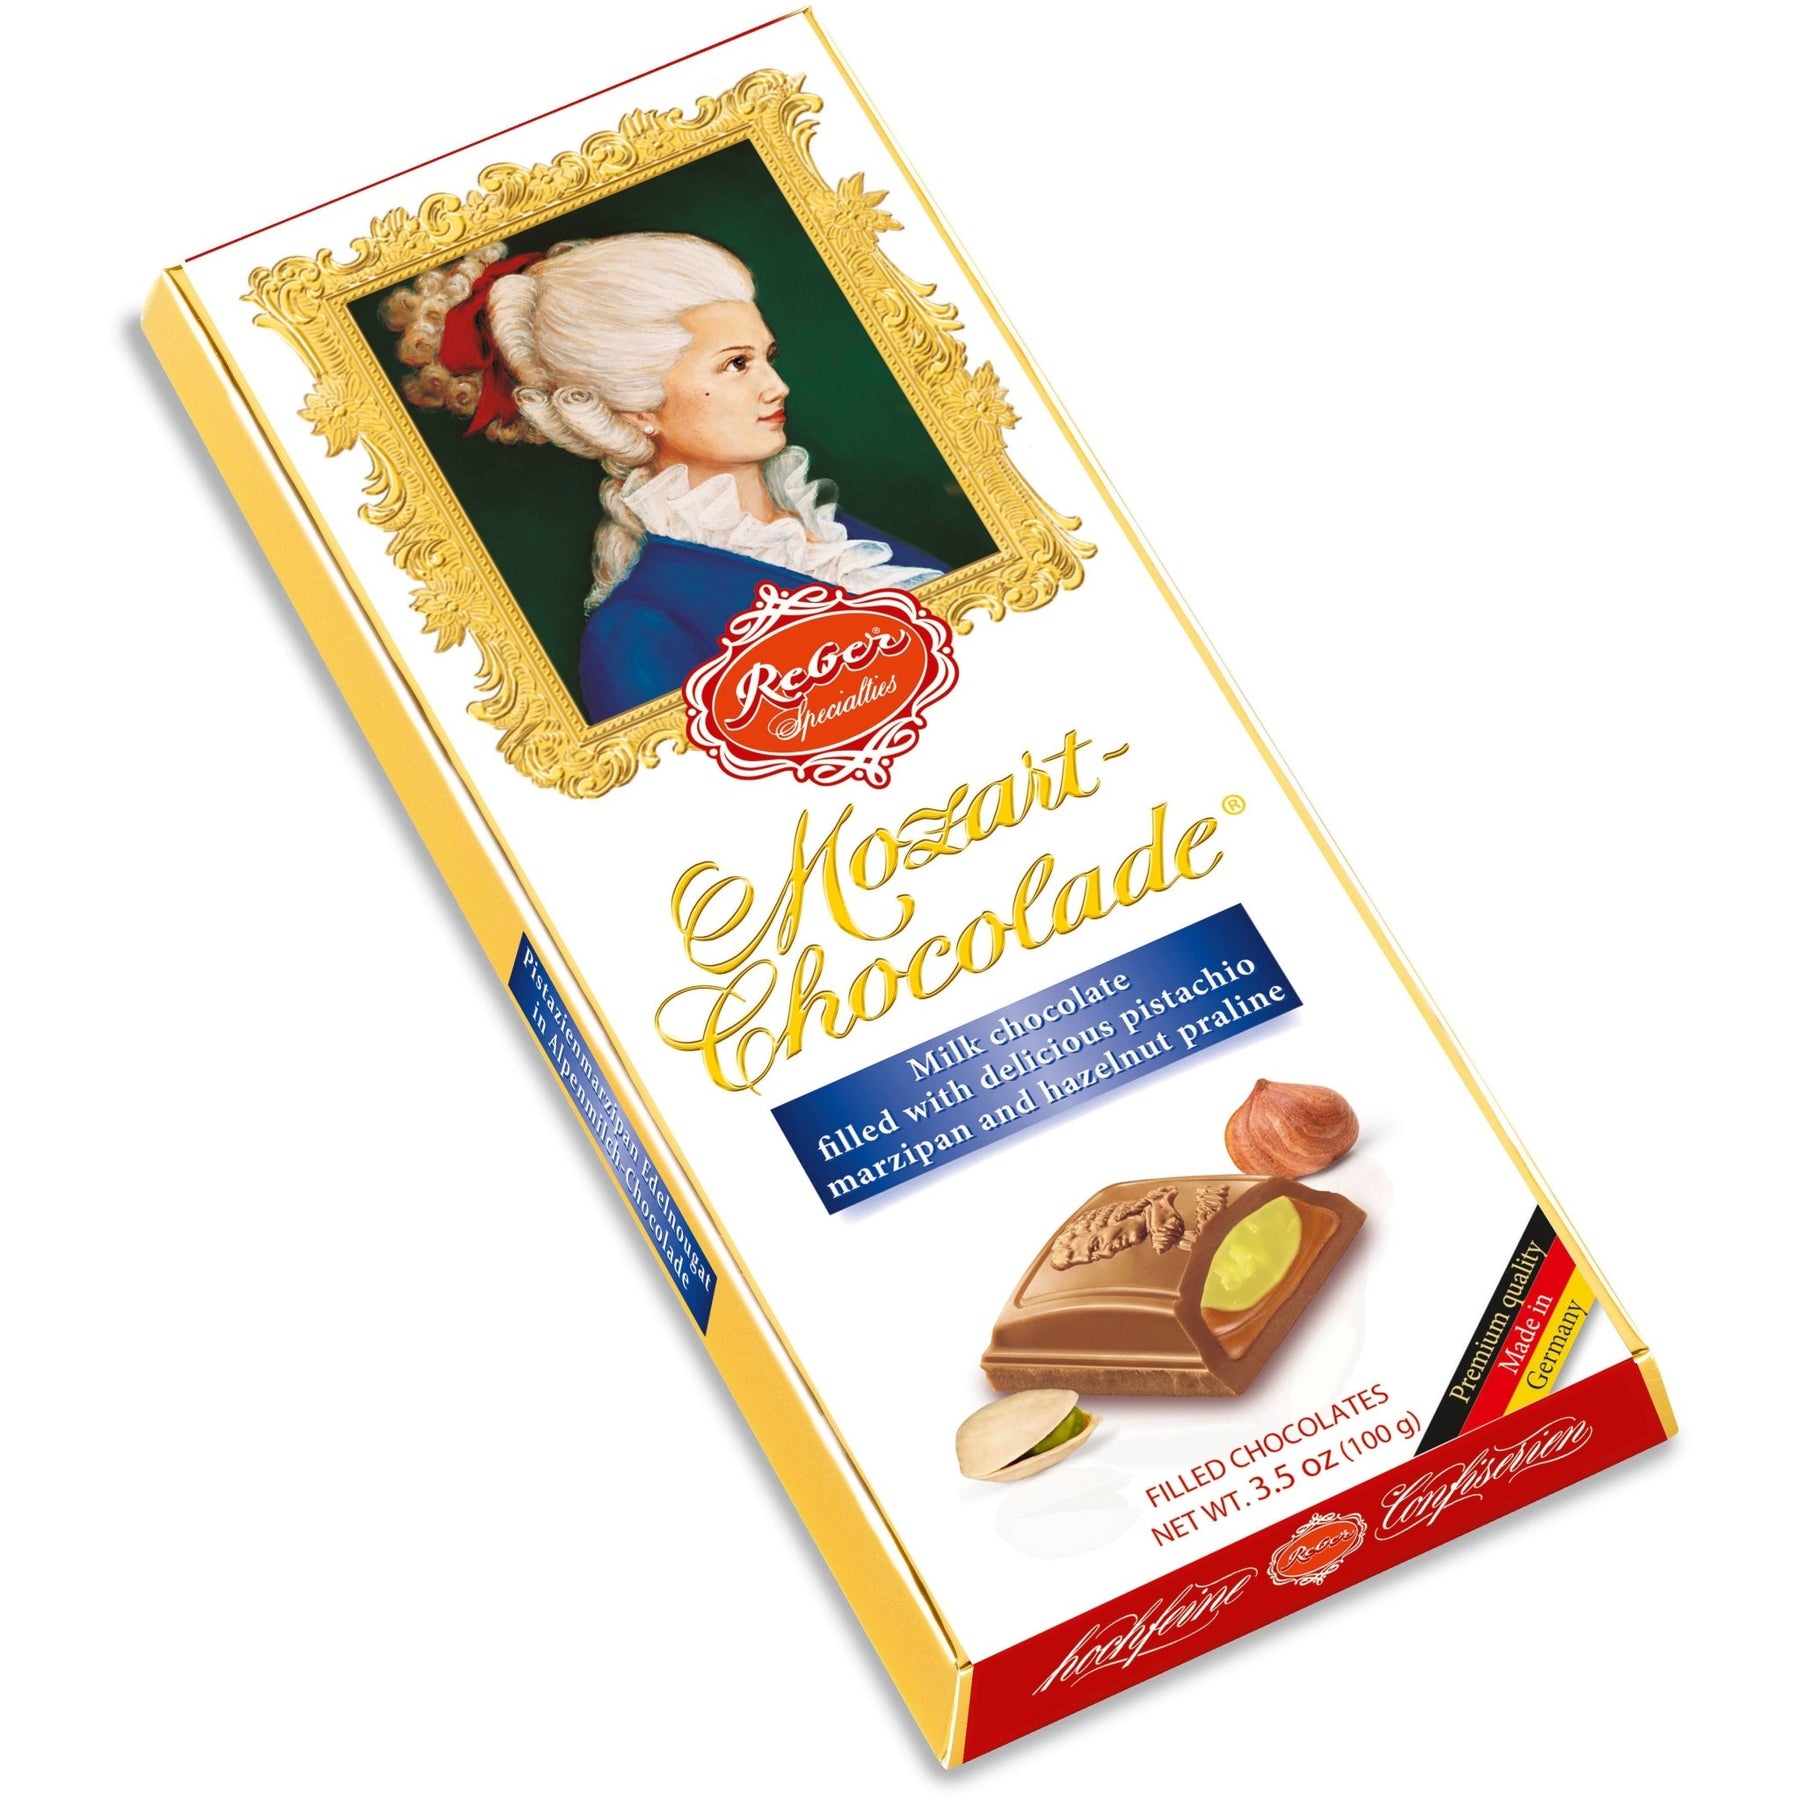 Reber Mozart Kugel Chocolate Violin – Chocolate & More Delights